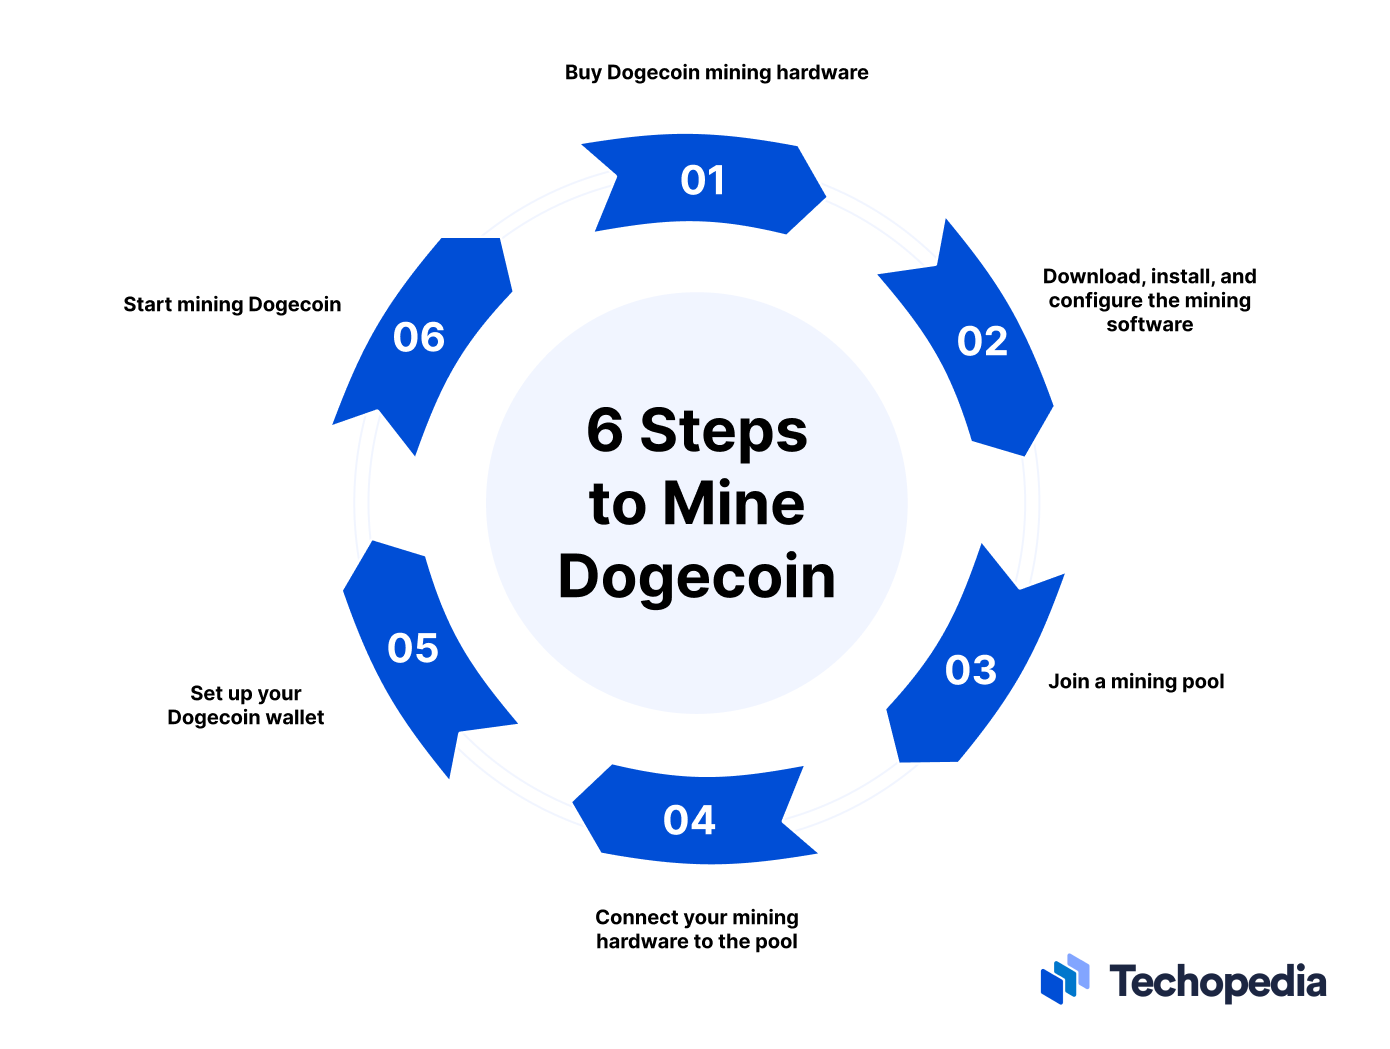 6 Steps to Mine Dogecoin